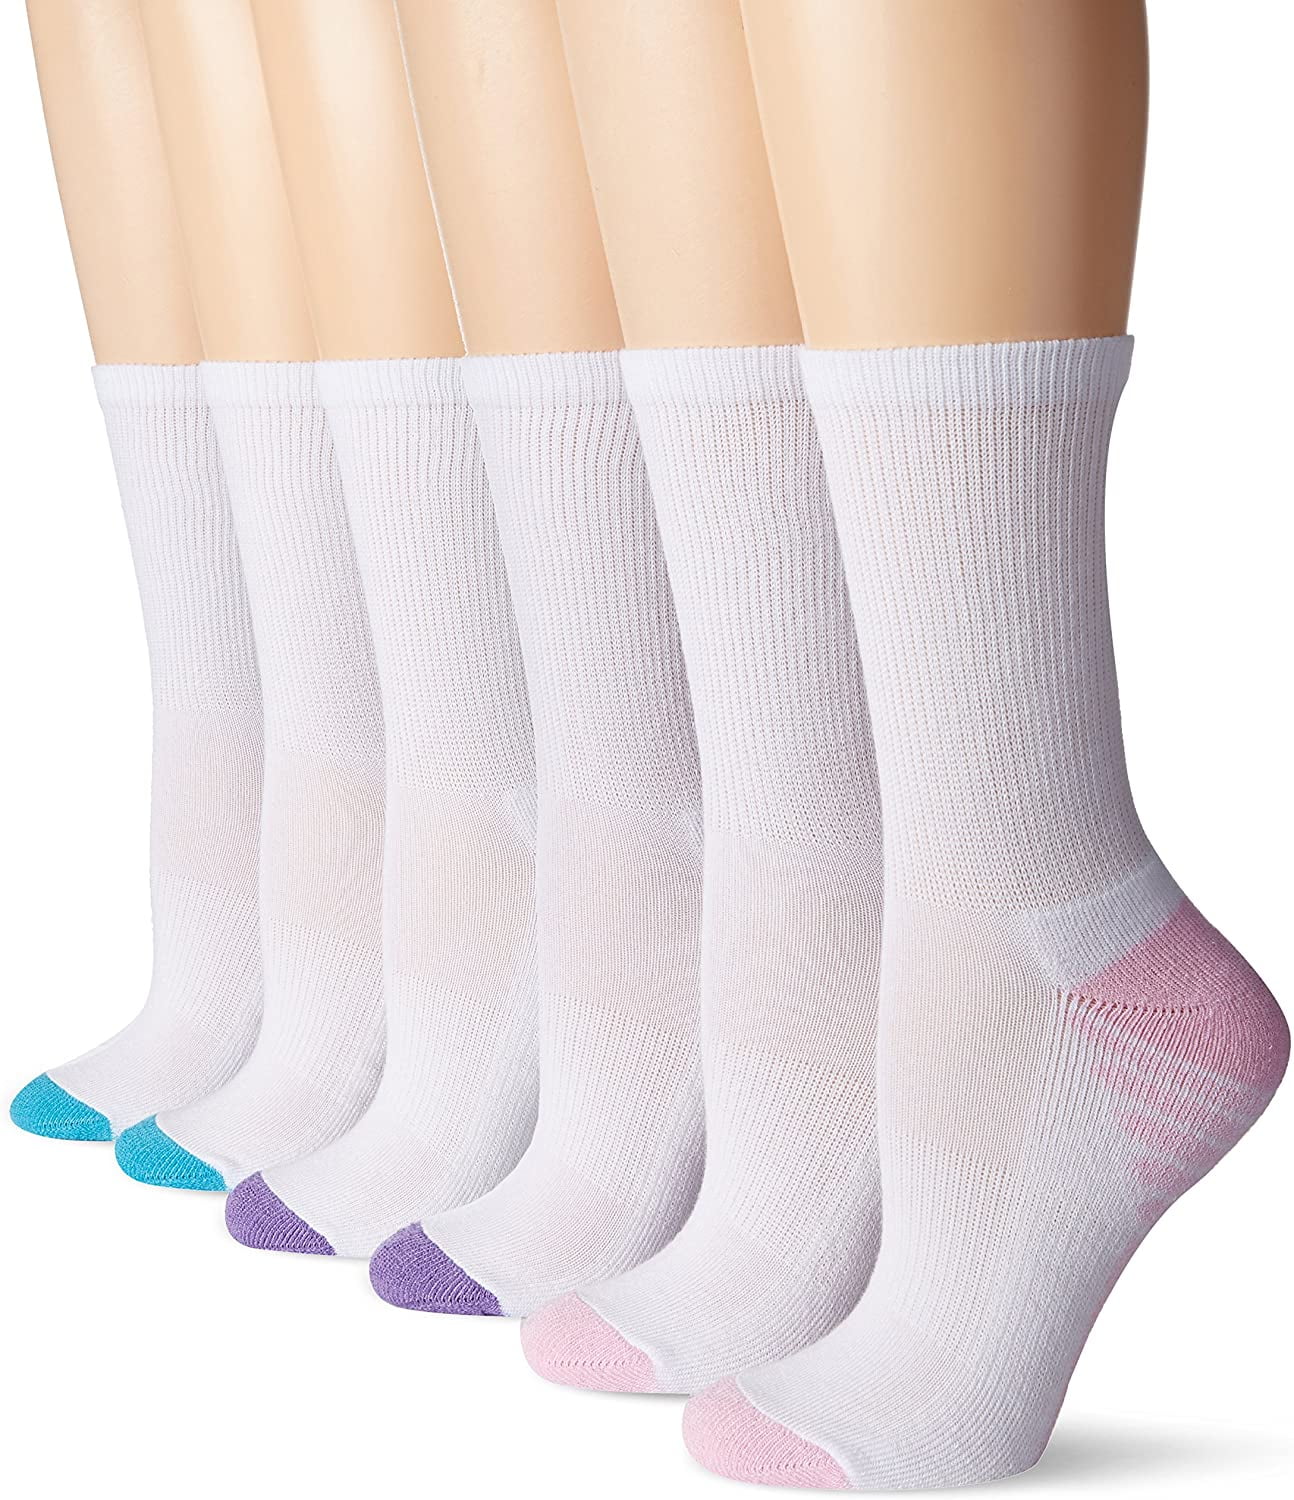 Women's sport crew socks, 6 pairs - Walmart.com